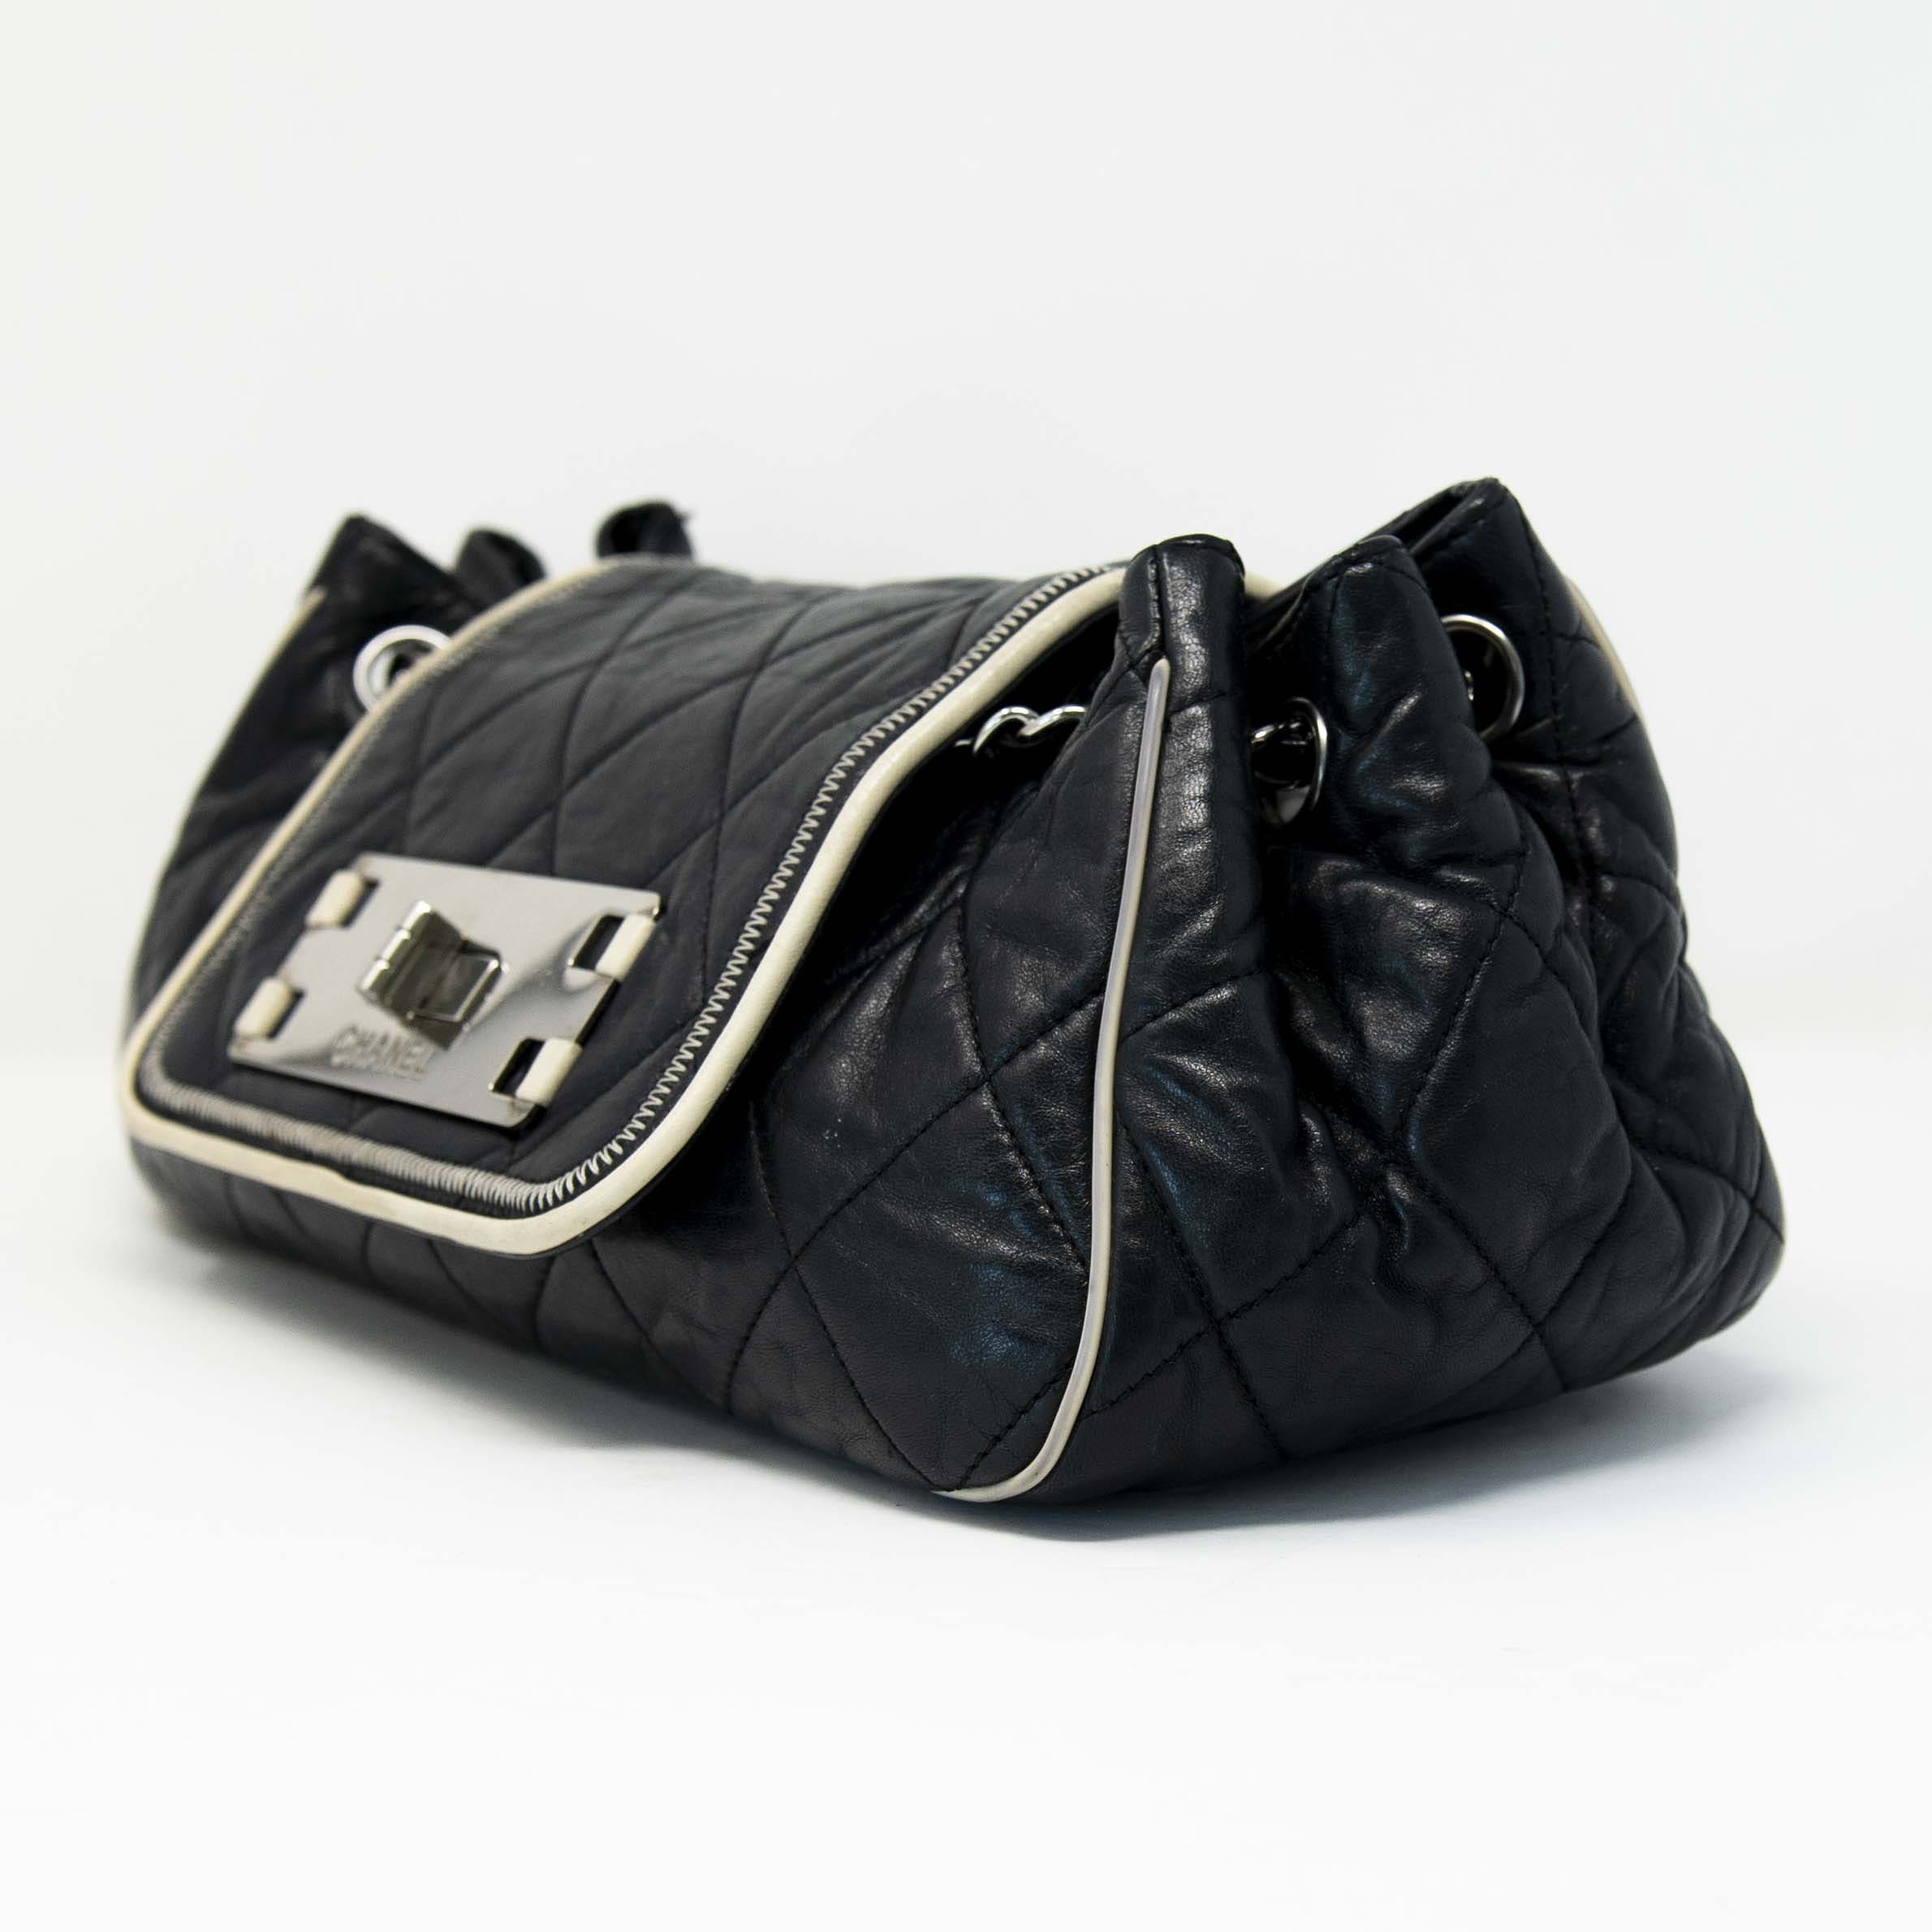 Chanel Black East West Mademoiselle Accordion Bag